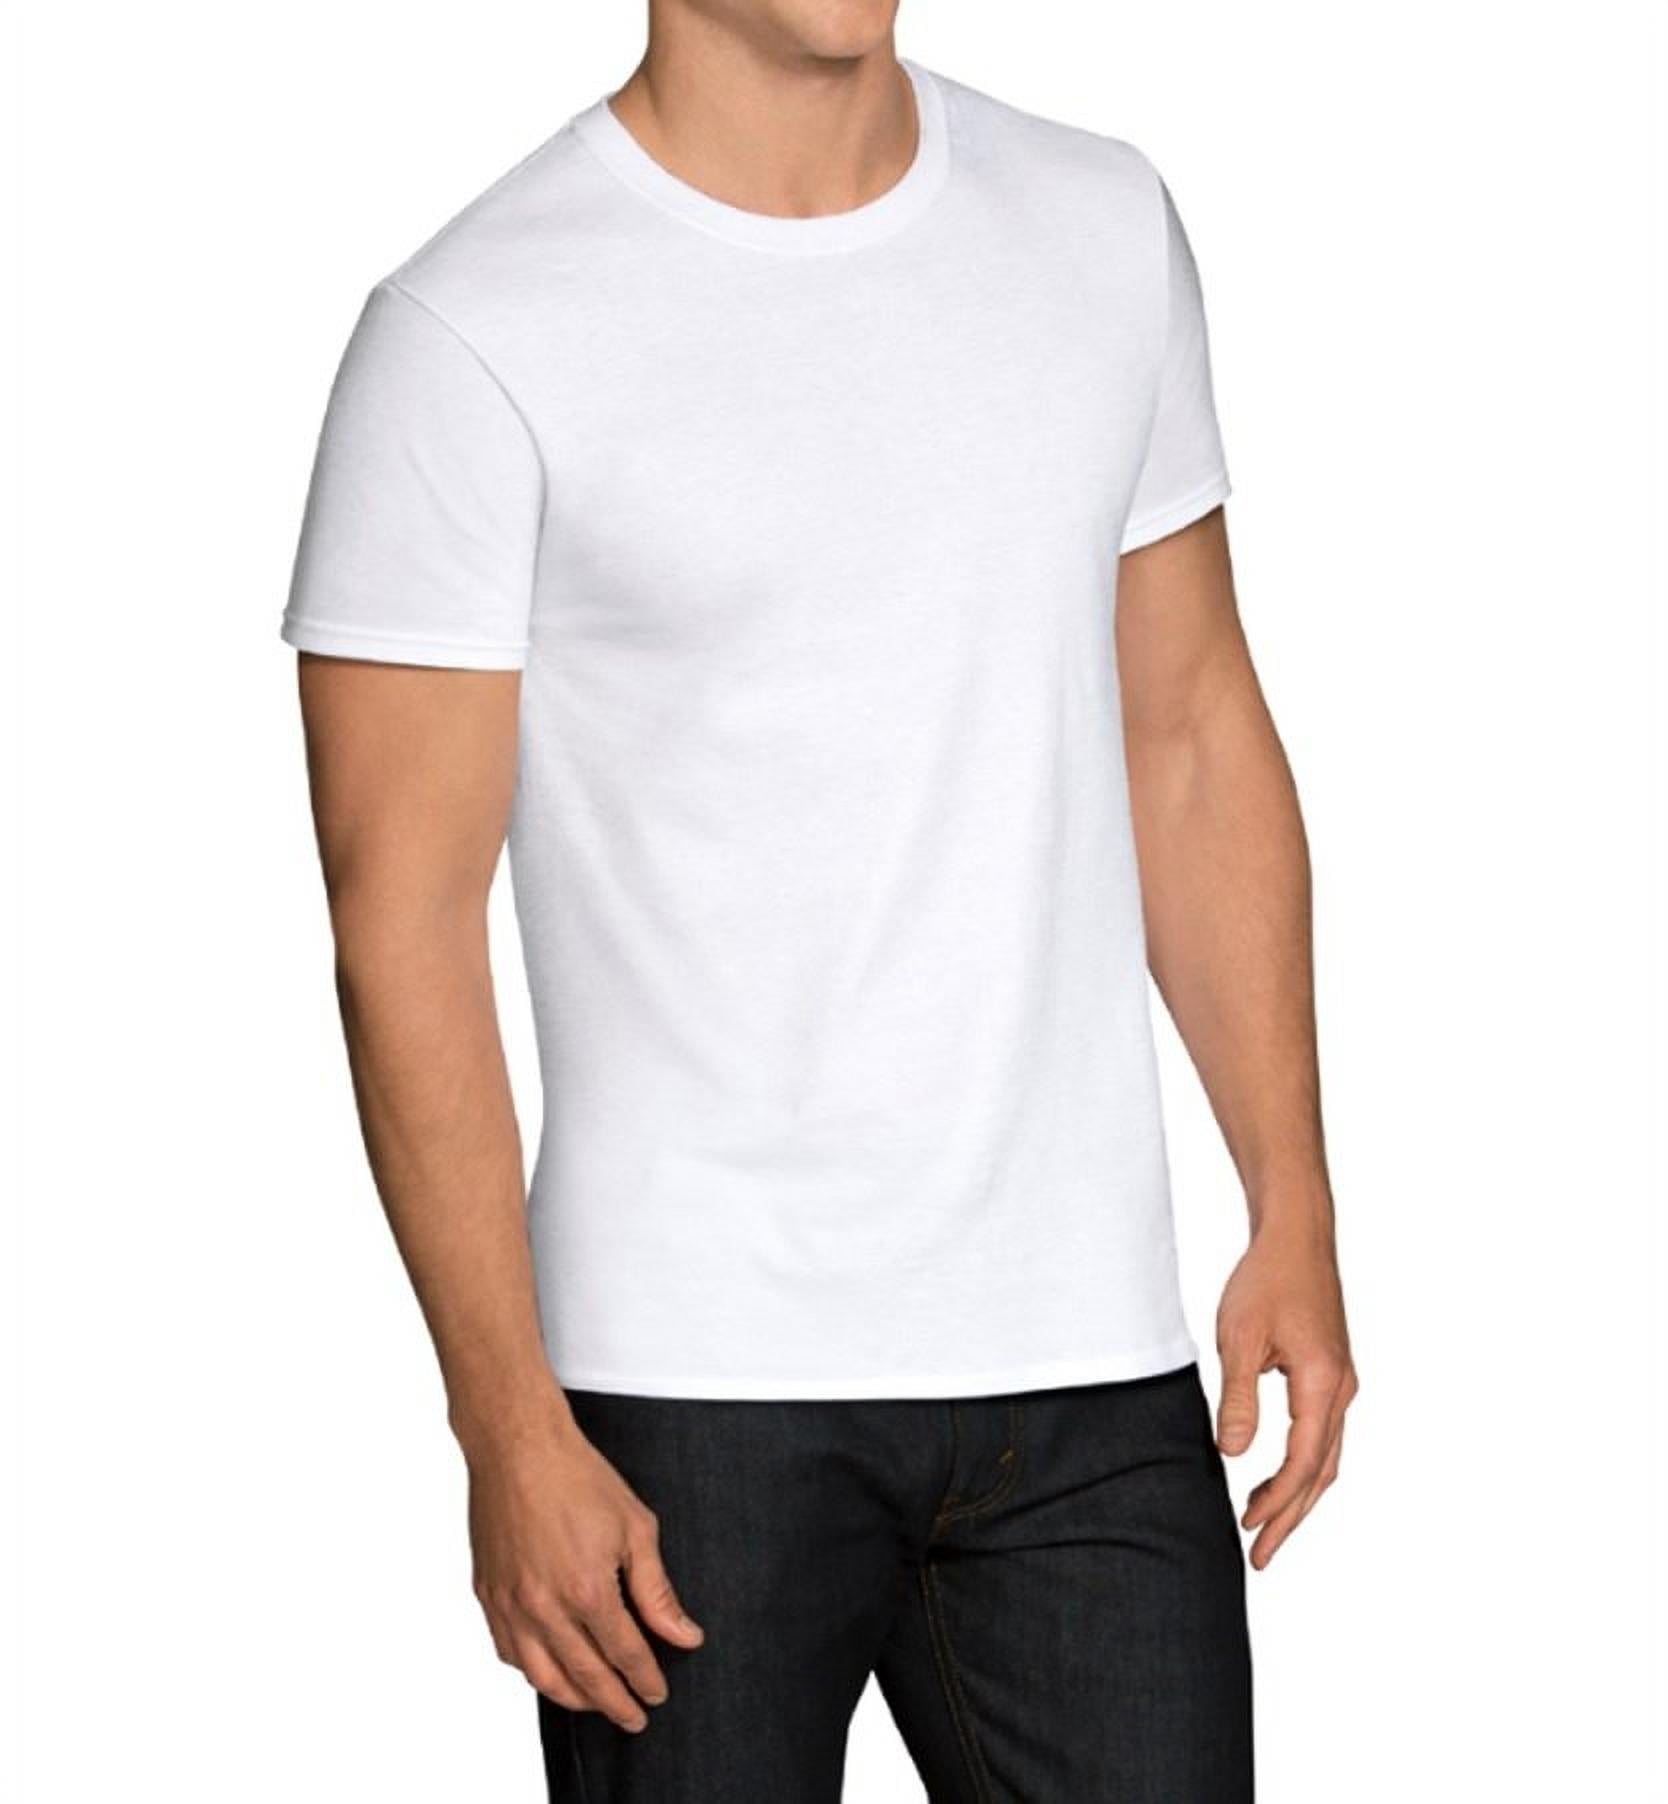 Fruit Of The Loom Plain White Cotton Lightweight Cheap Budget Tee T-Shirt  Tshirt